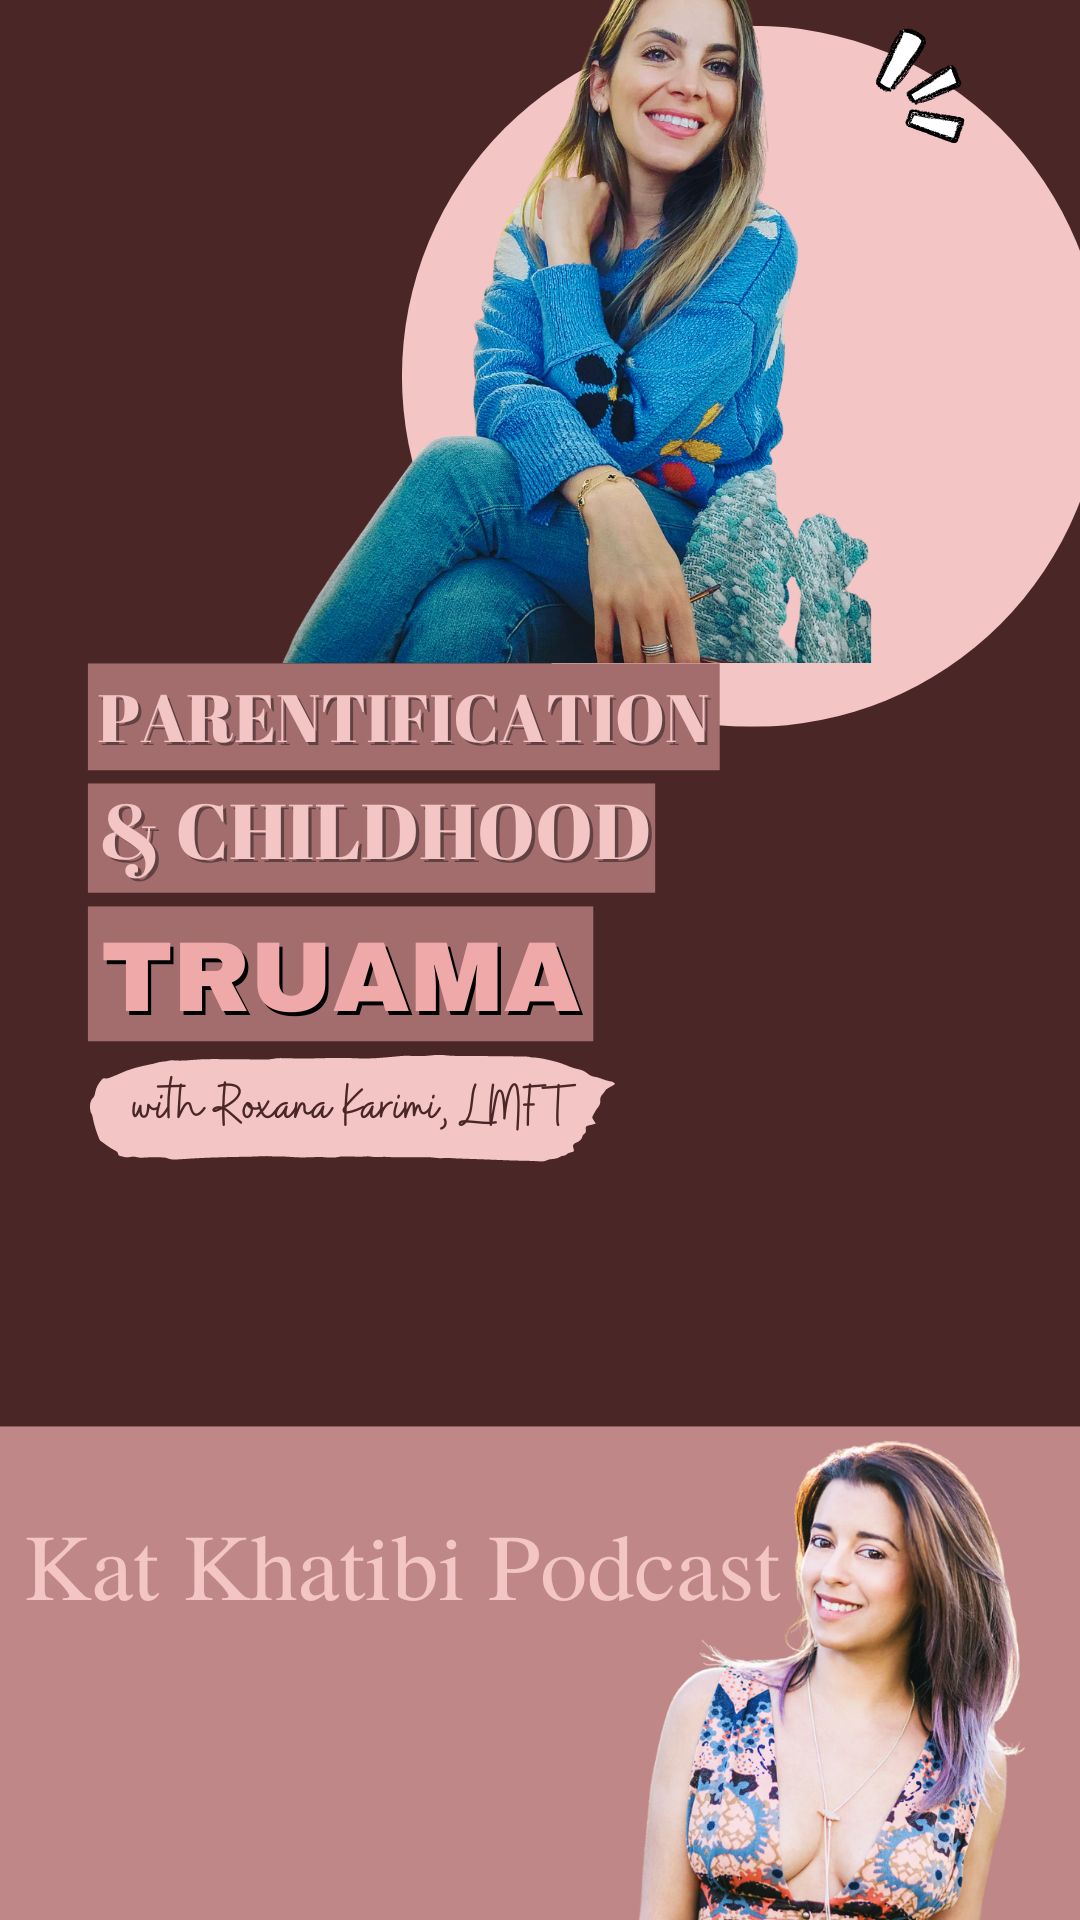 Parentification and Childhood Trauma with Roxana Karimi, LMFT